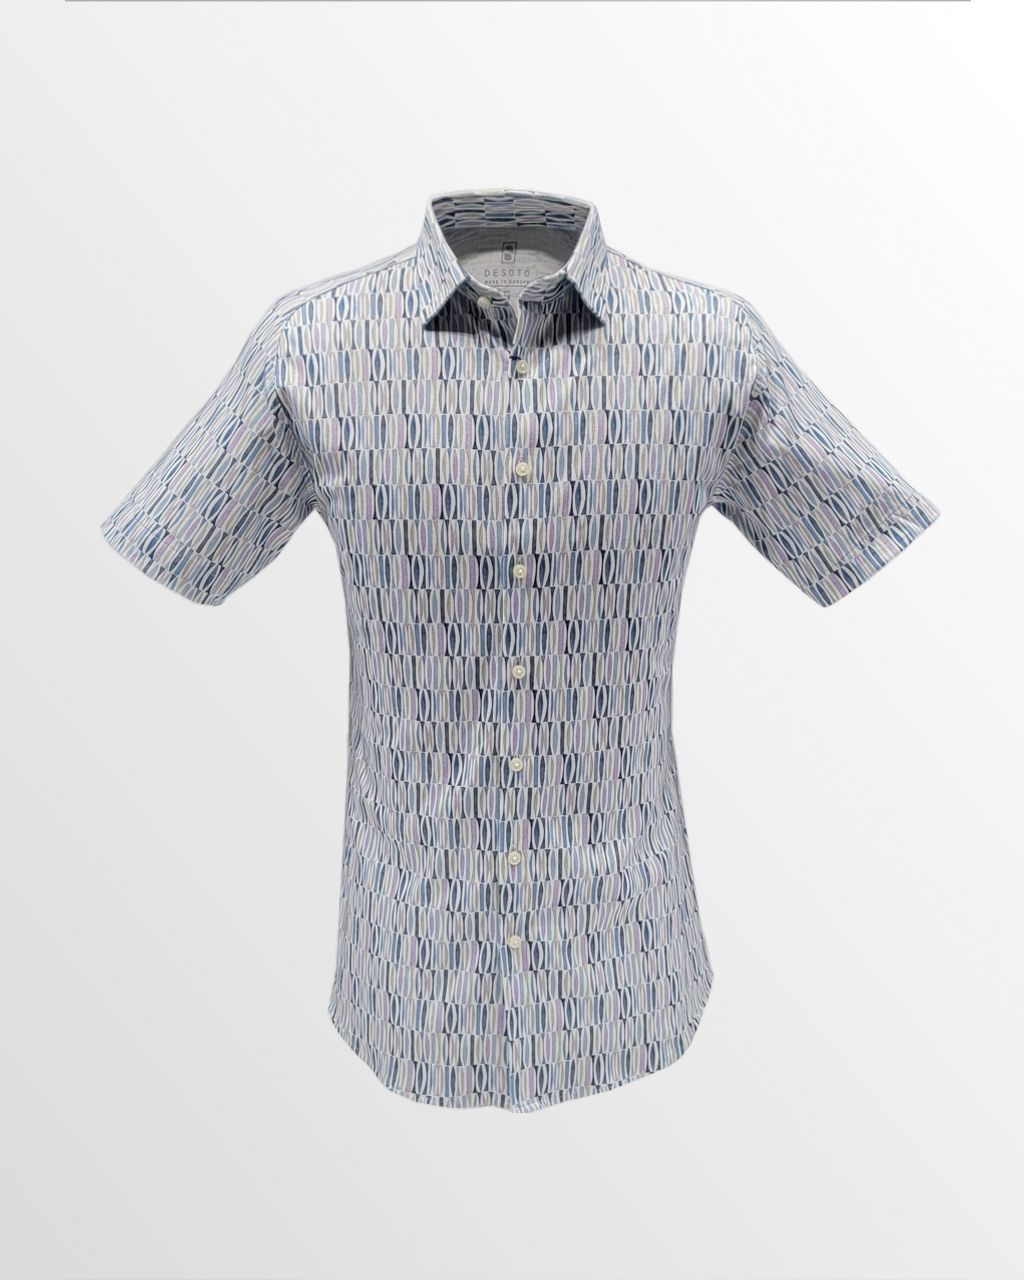 Desoto Short Sleeve Jersey Shirt in Oblong Ovals